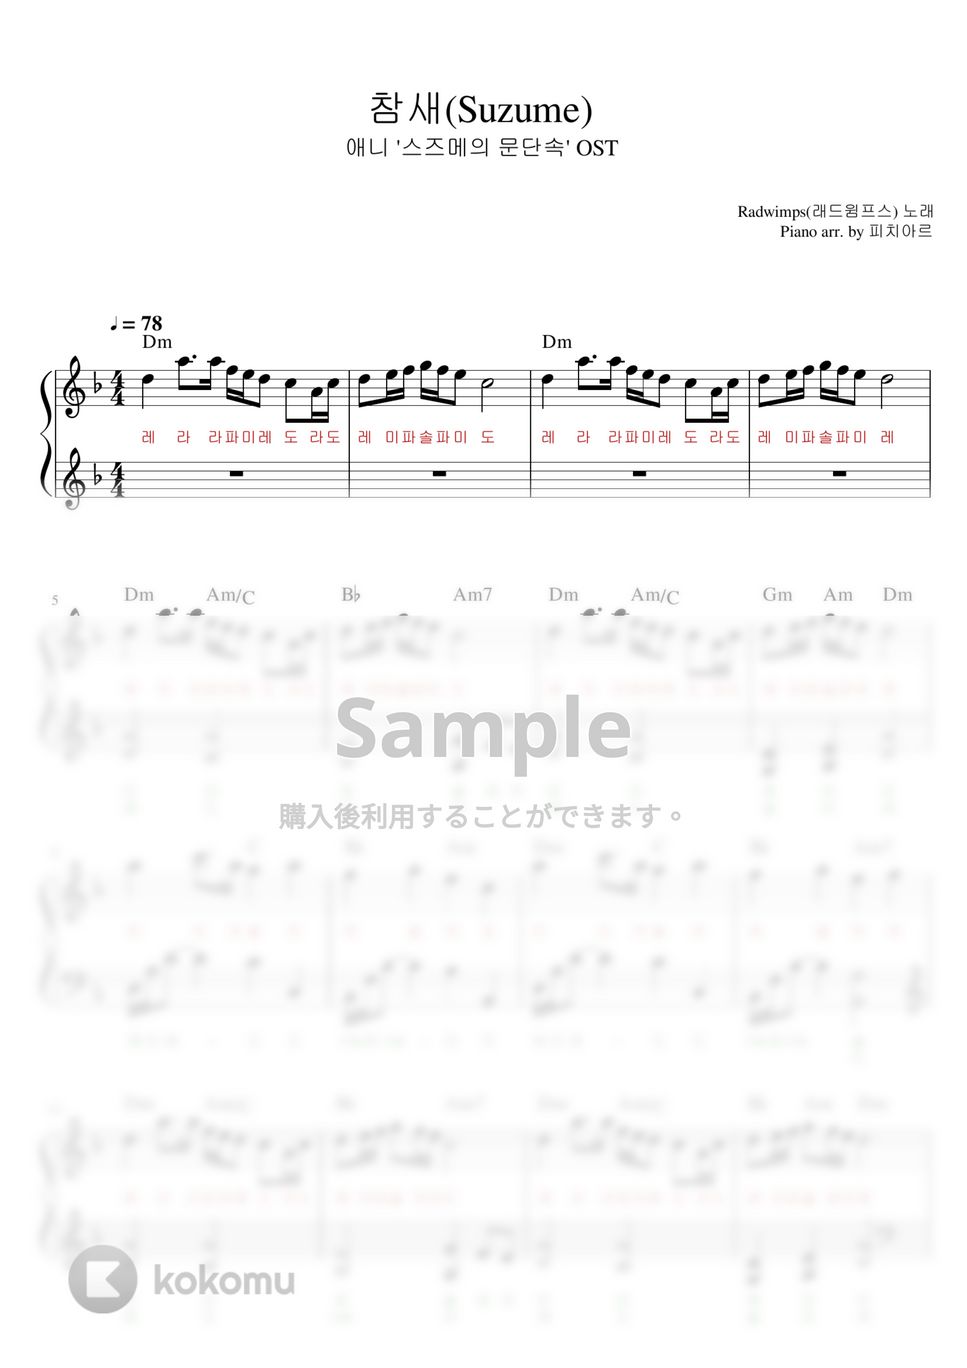 Radwimps - すずめ(참새, Suzume) (すずめの戸締まり OST , easy ver.) by Pichi Ahr